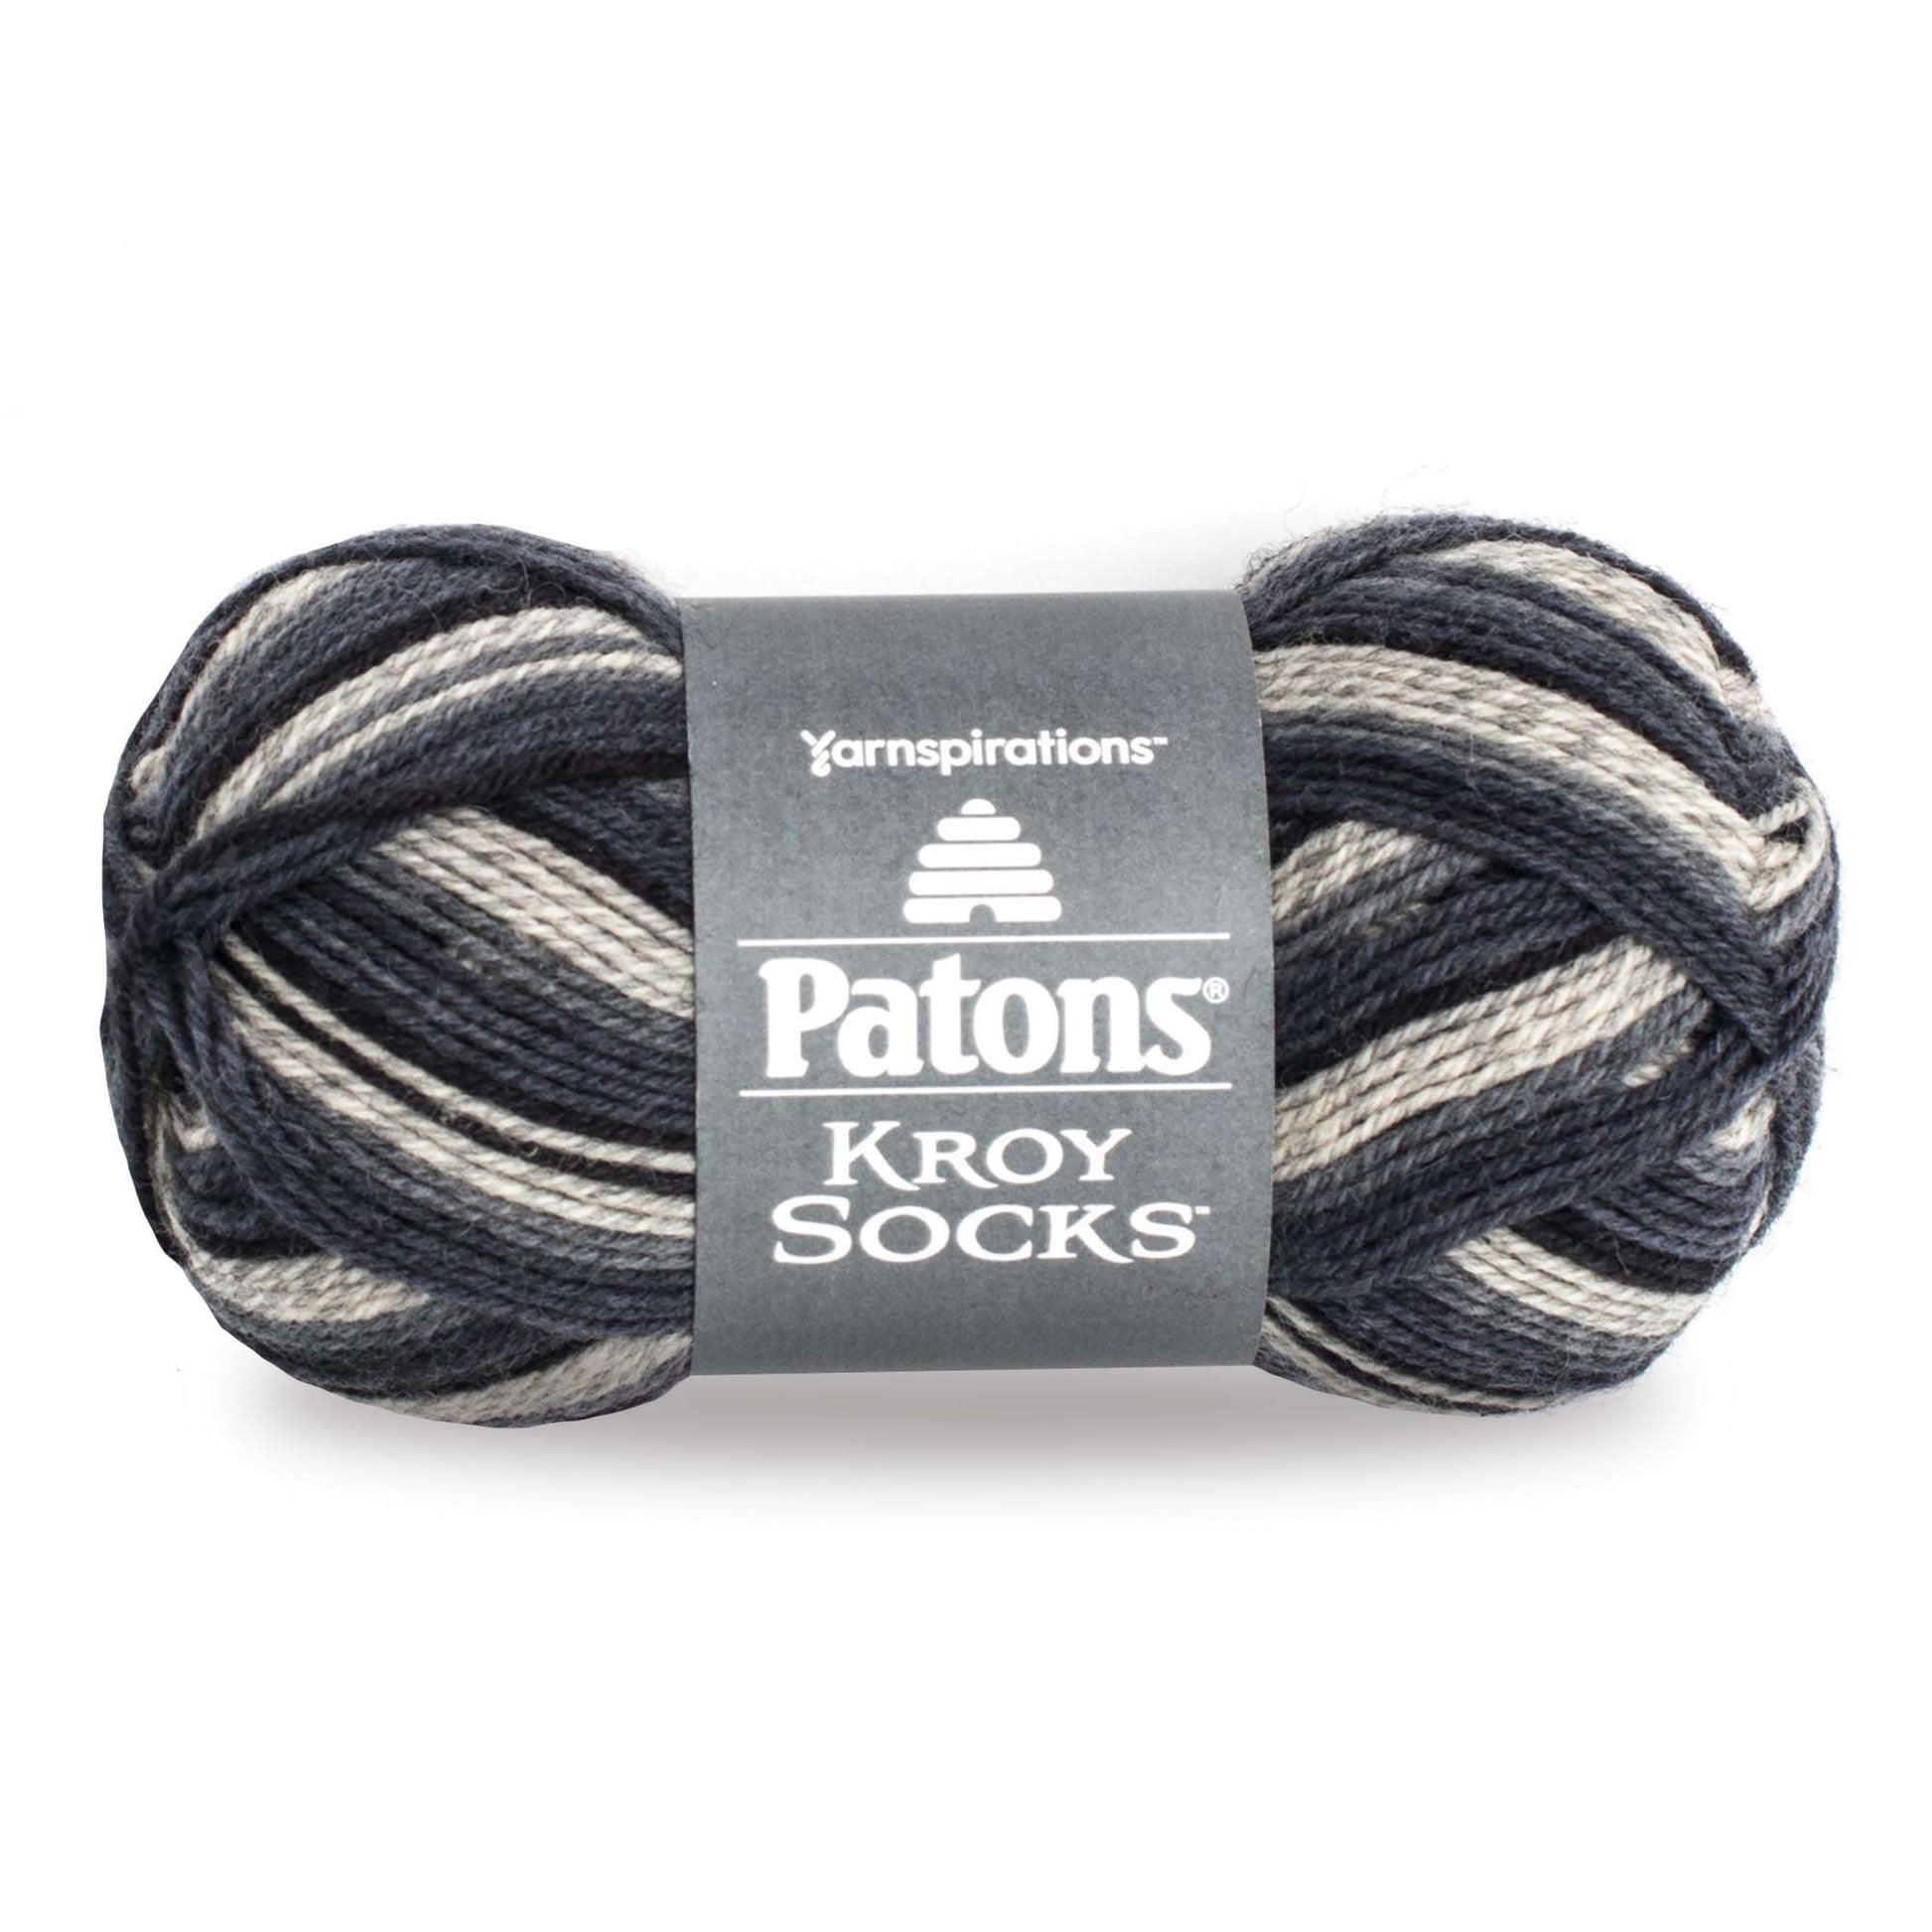 Patons Kroy Socks Yarn Eclipse Stripes